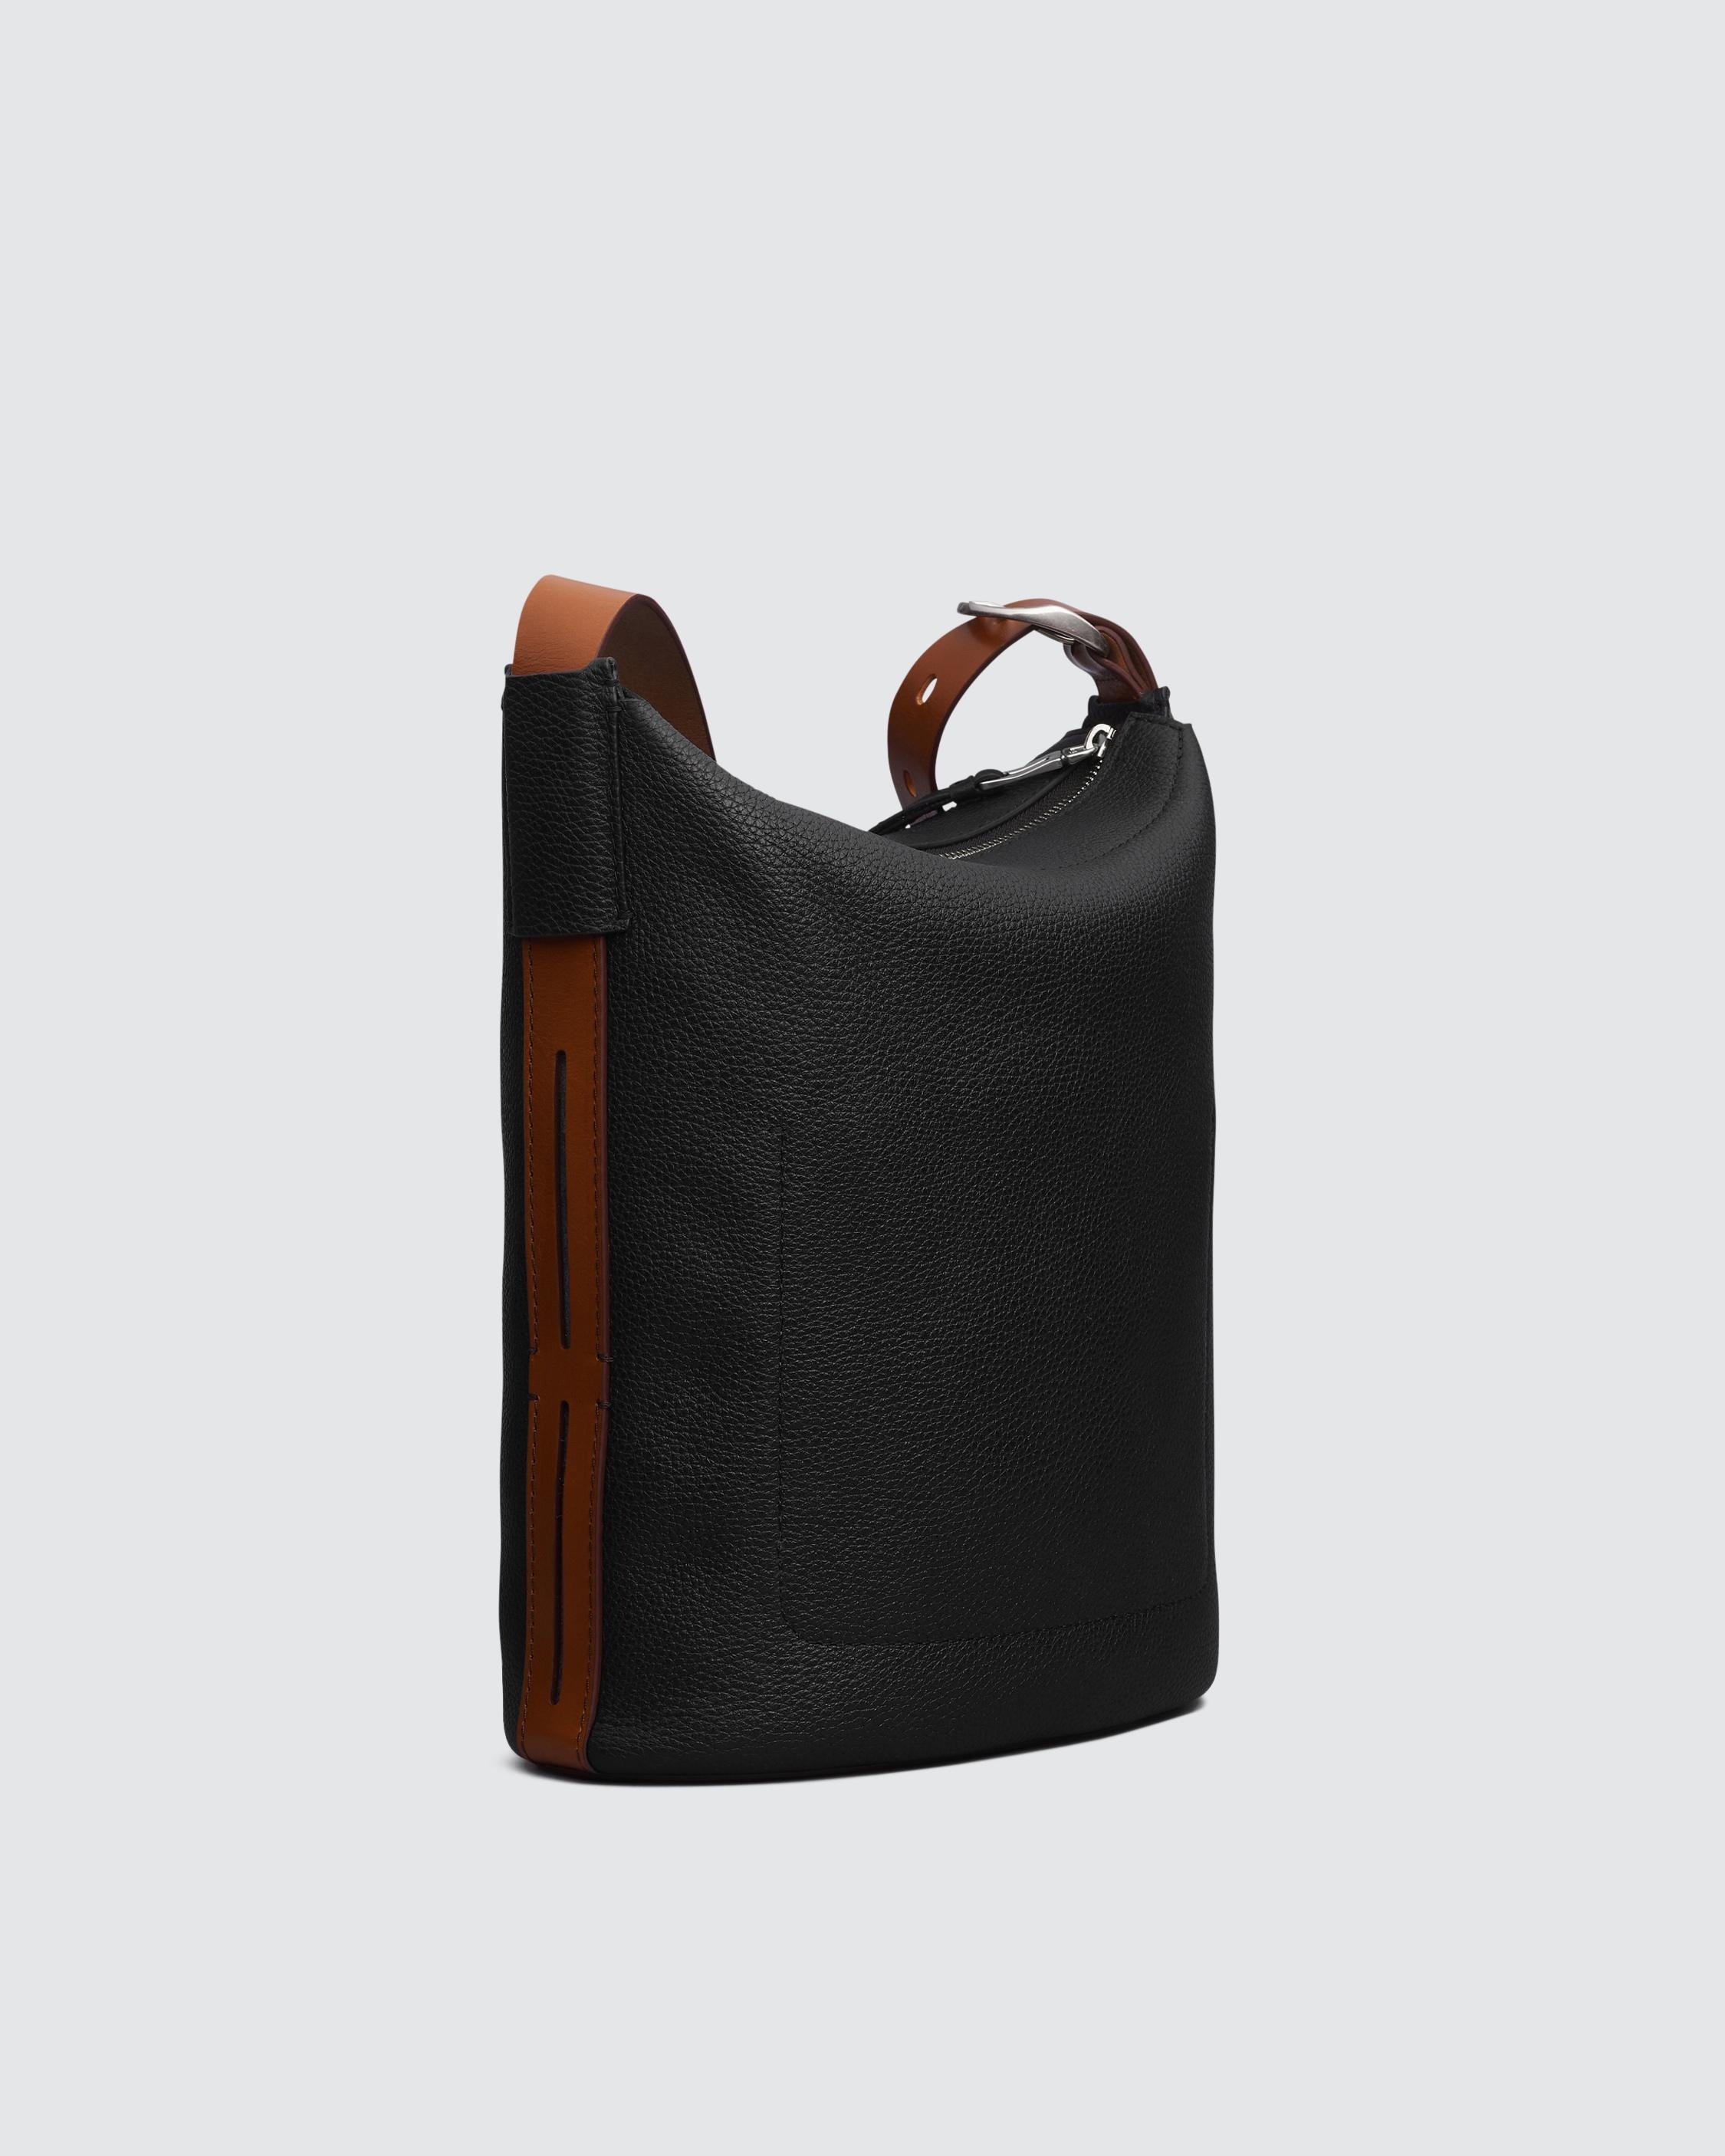 Belize Bucket Bag - Leather
Crossbody Bag - 3